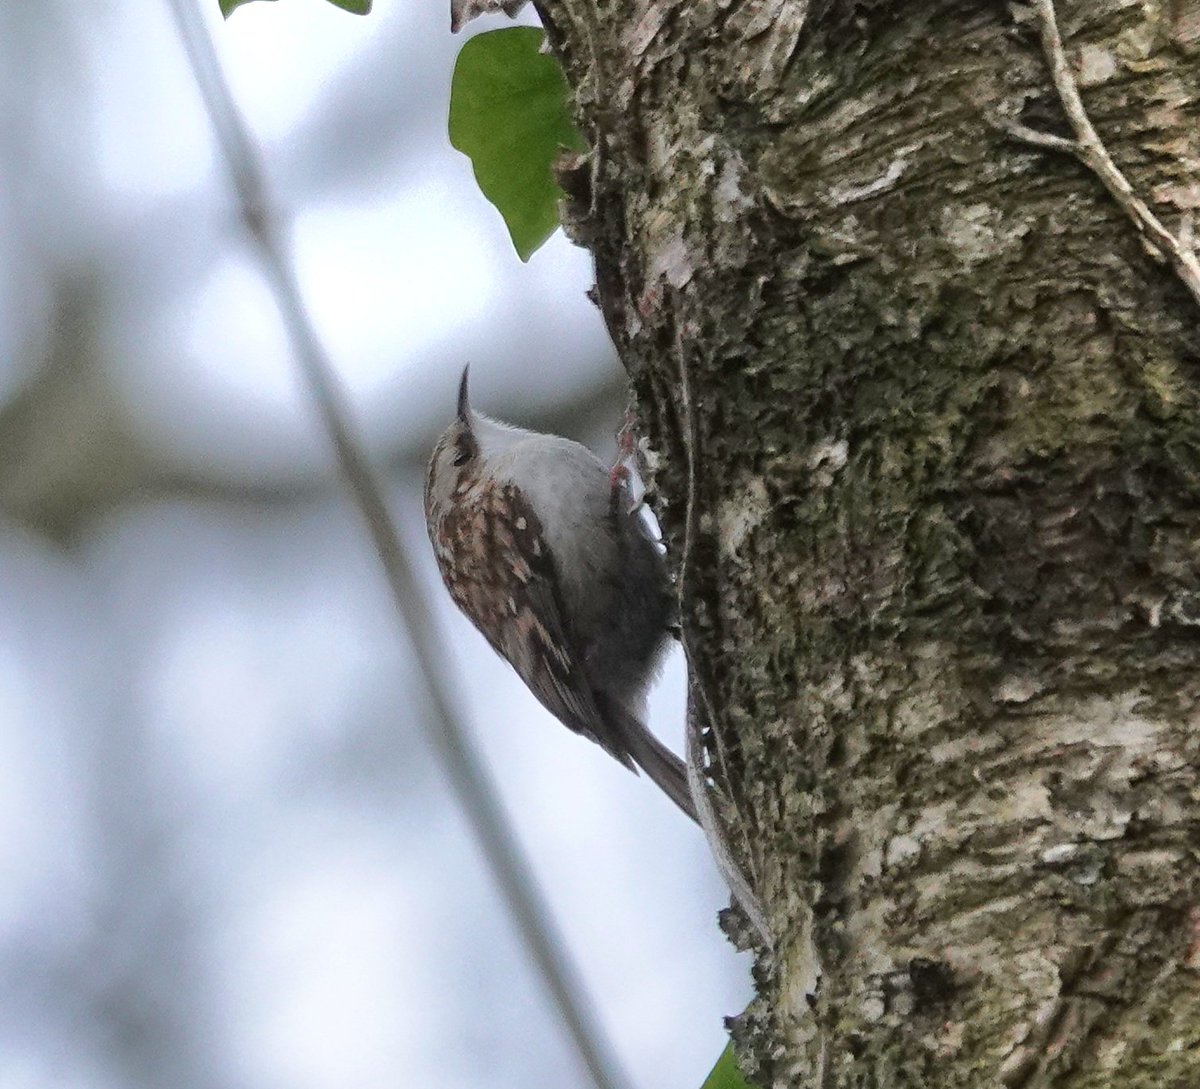 Treecreeper from this morning #birdwatching #birdphotography #BirdsOfTwitter #BirdsSeenIn2024